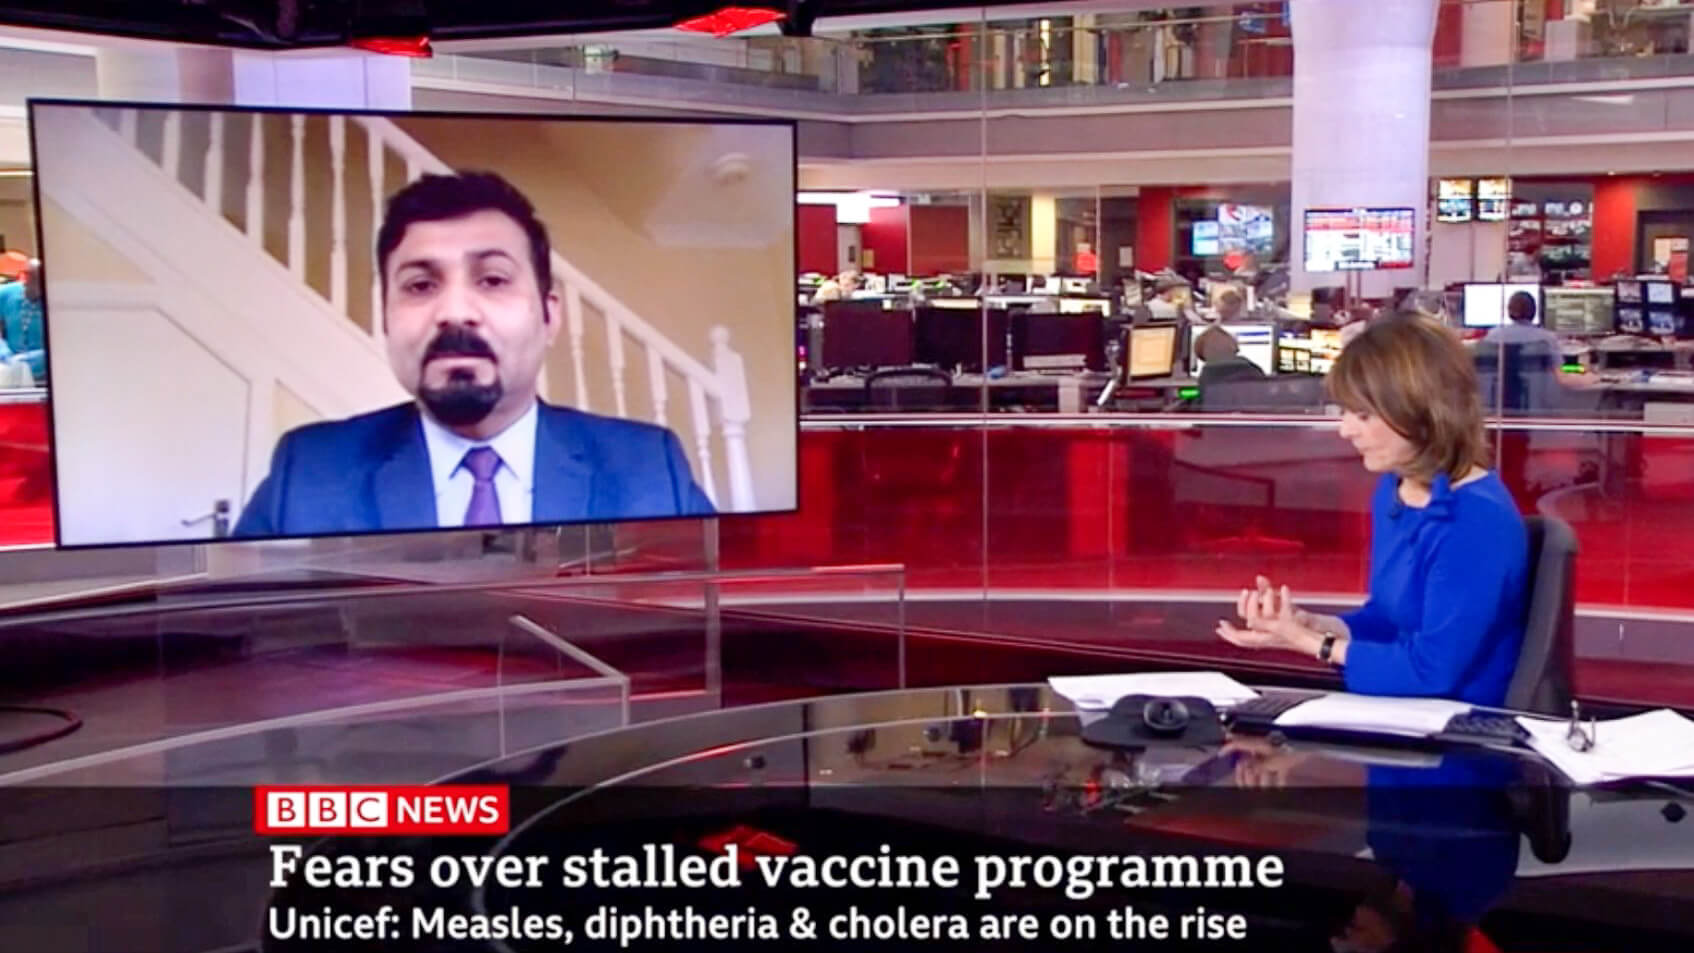 Dr Muhammad Munir being interviewed by the BBC.